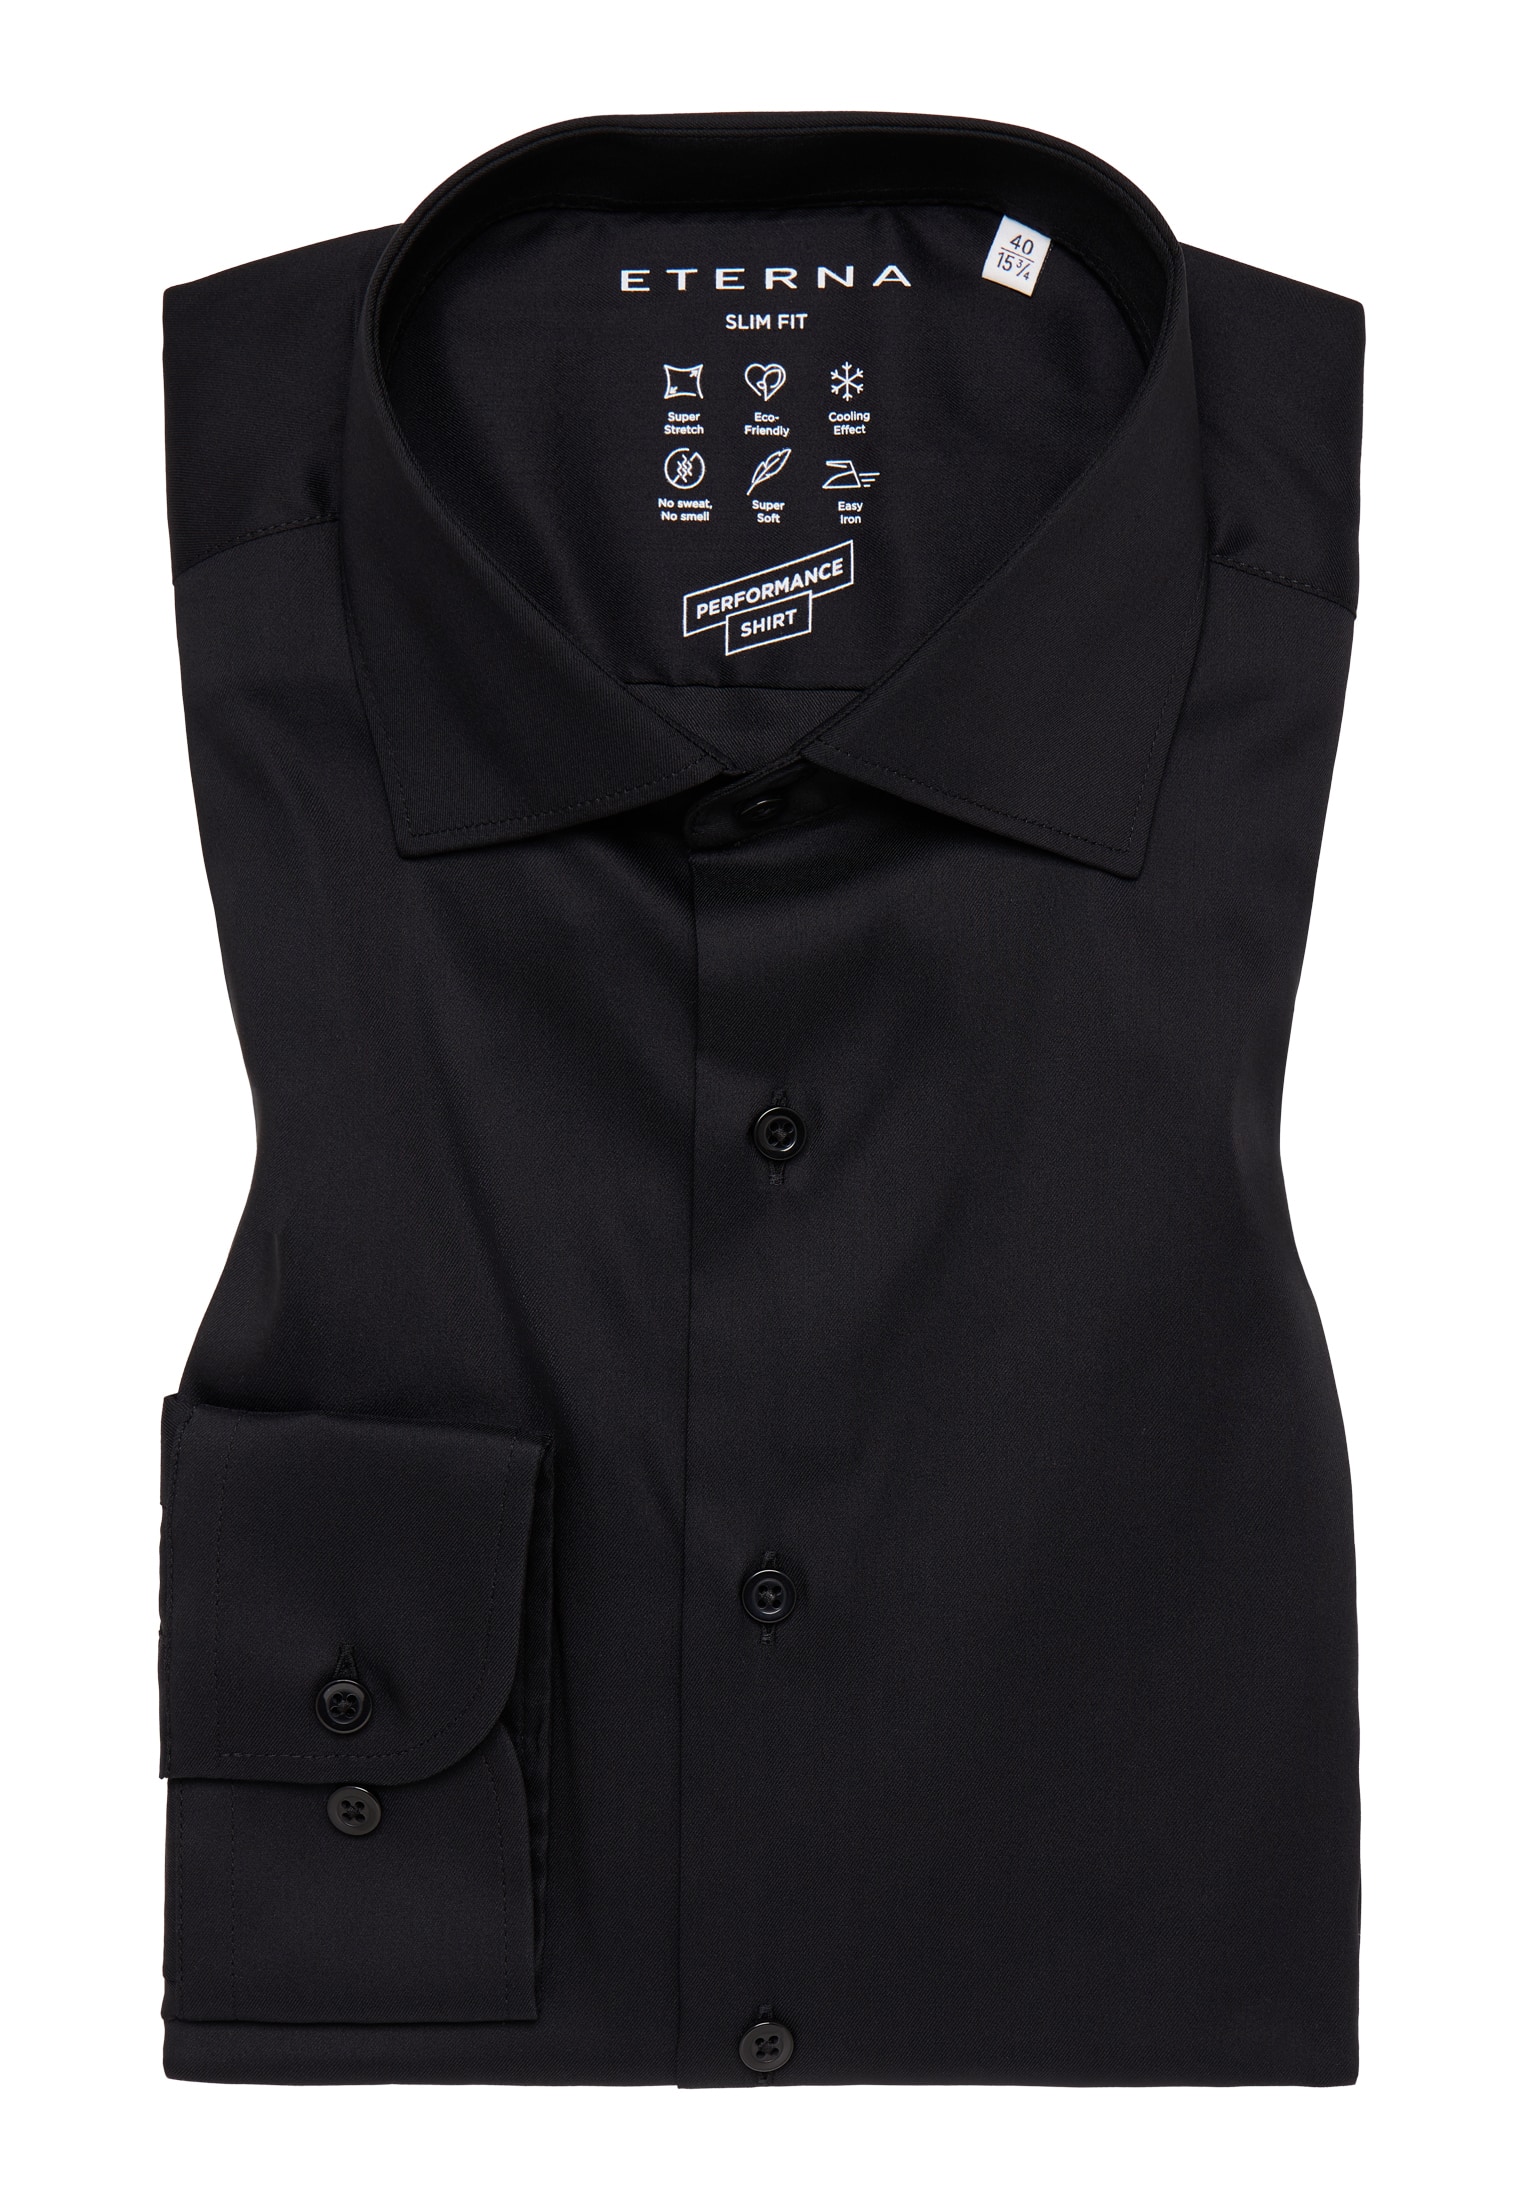 | 38 black long in SLIM FIT | 1SH02217-03-91-38-1/1 Shirt black Performance | sleeve plain |